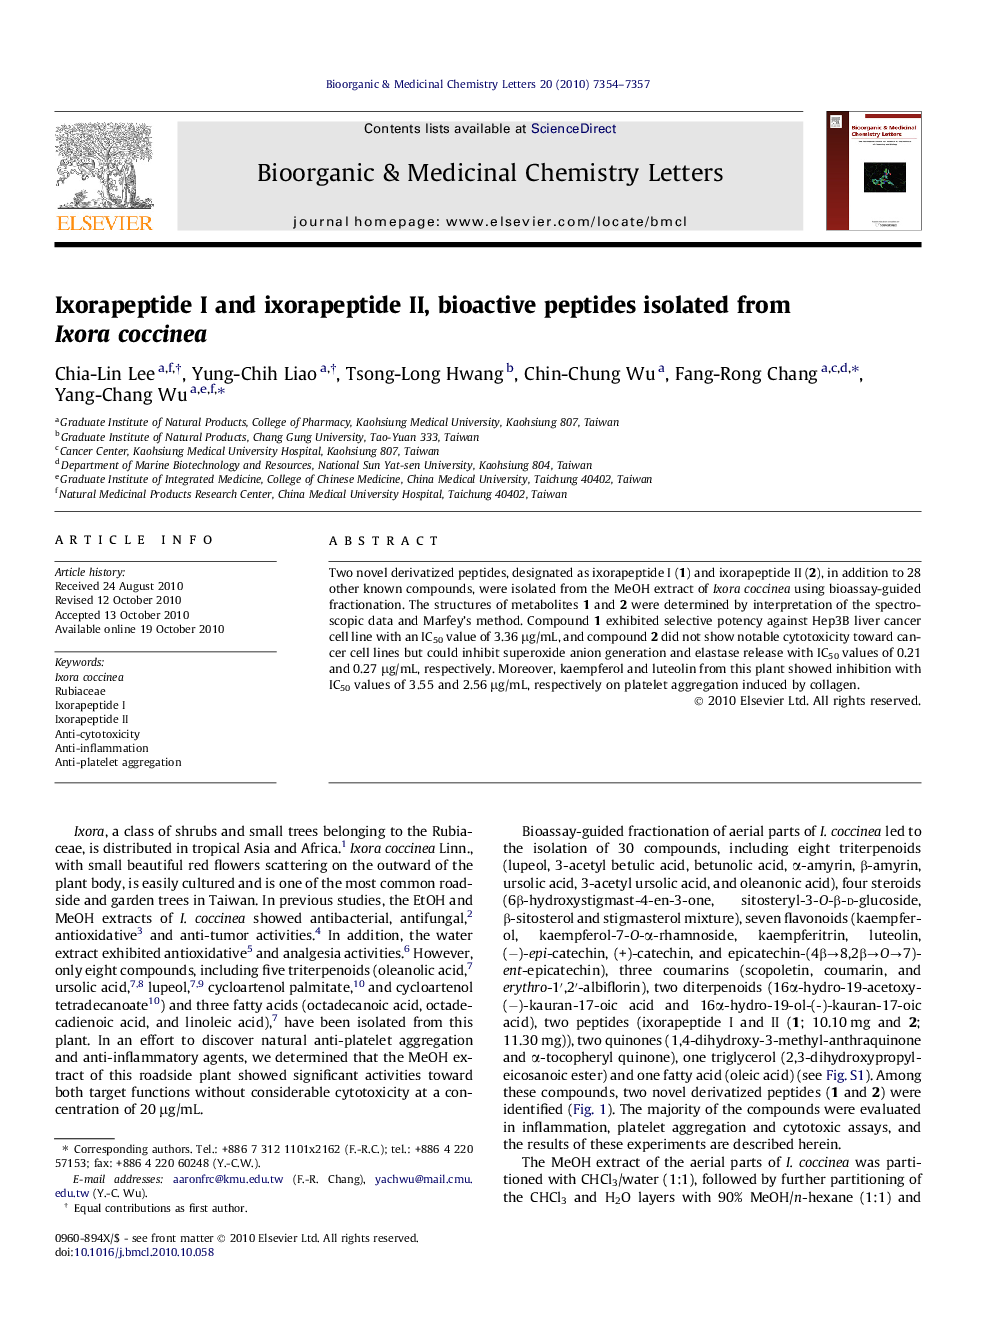 Ixorapeptide I and ixorapeptide II, bioactive peptides isolated from Ixora coccinea